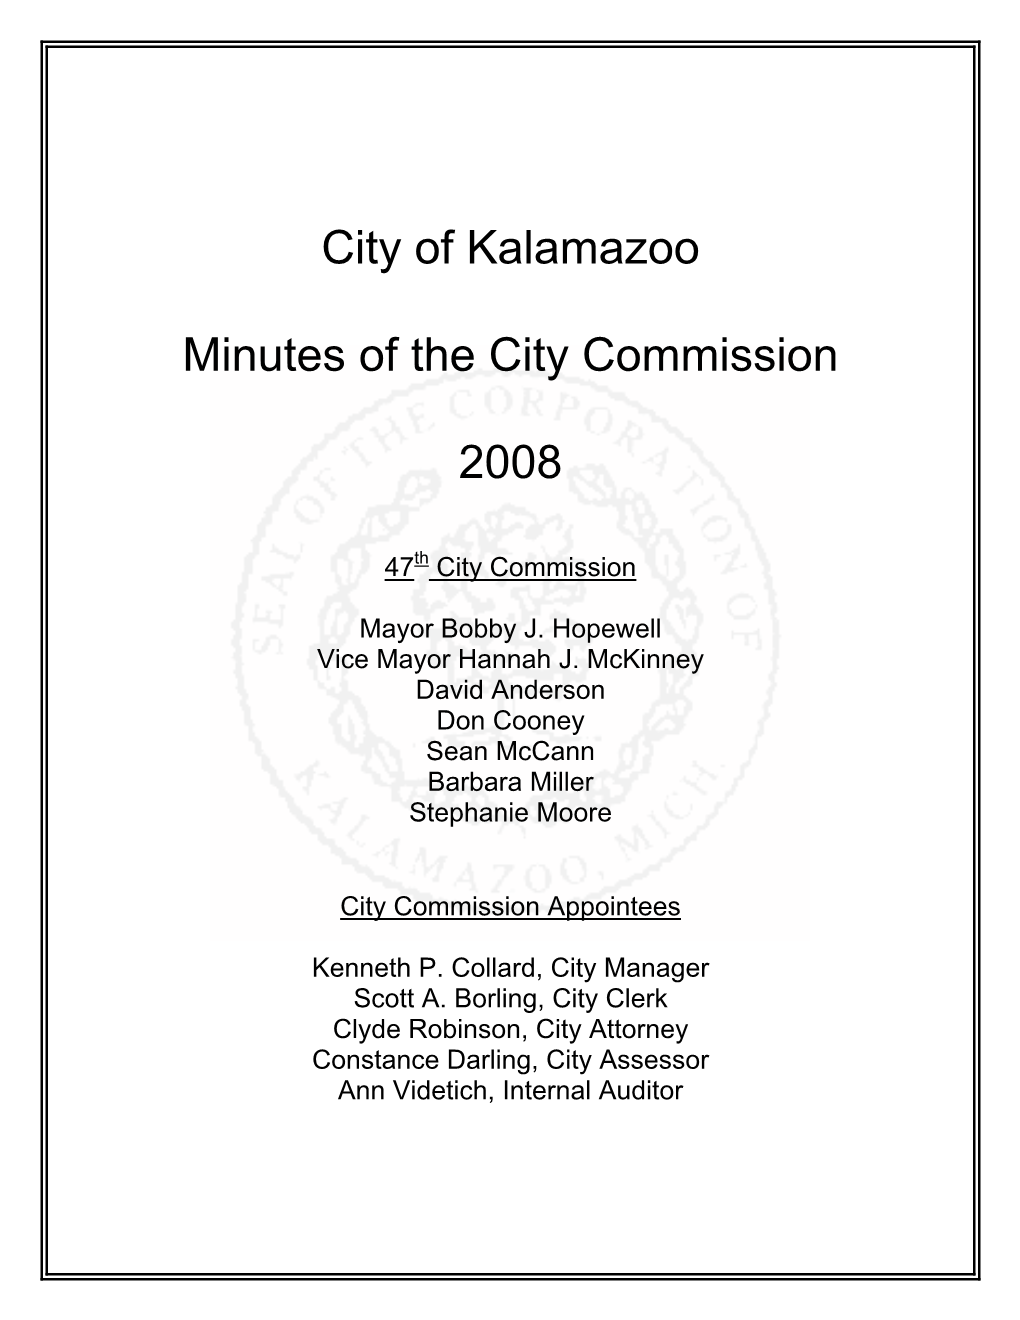 2008 City Commission Minutes